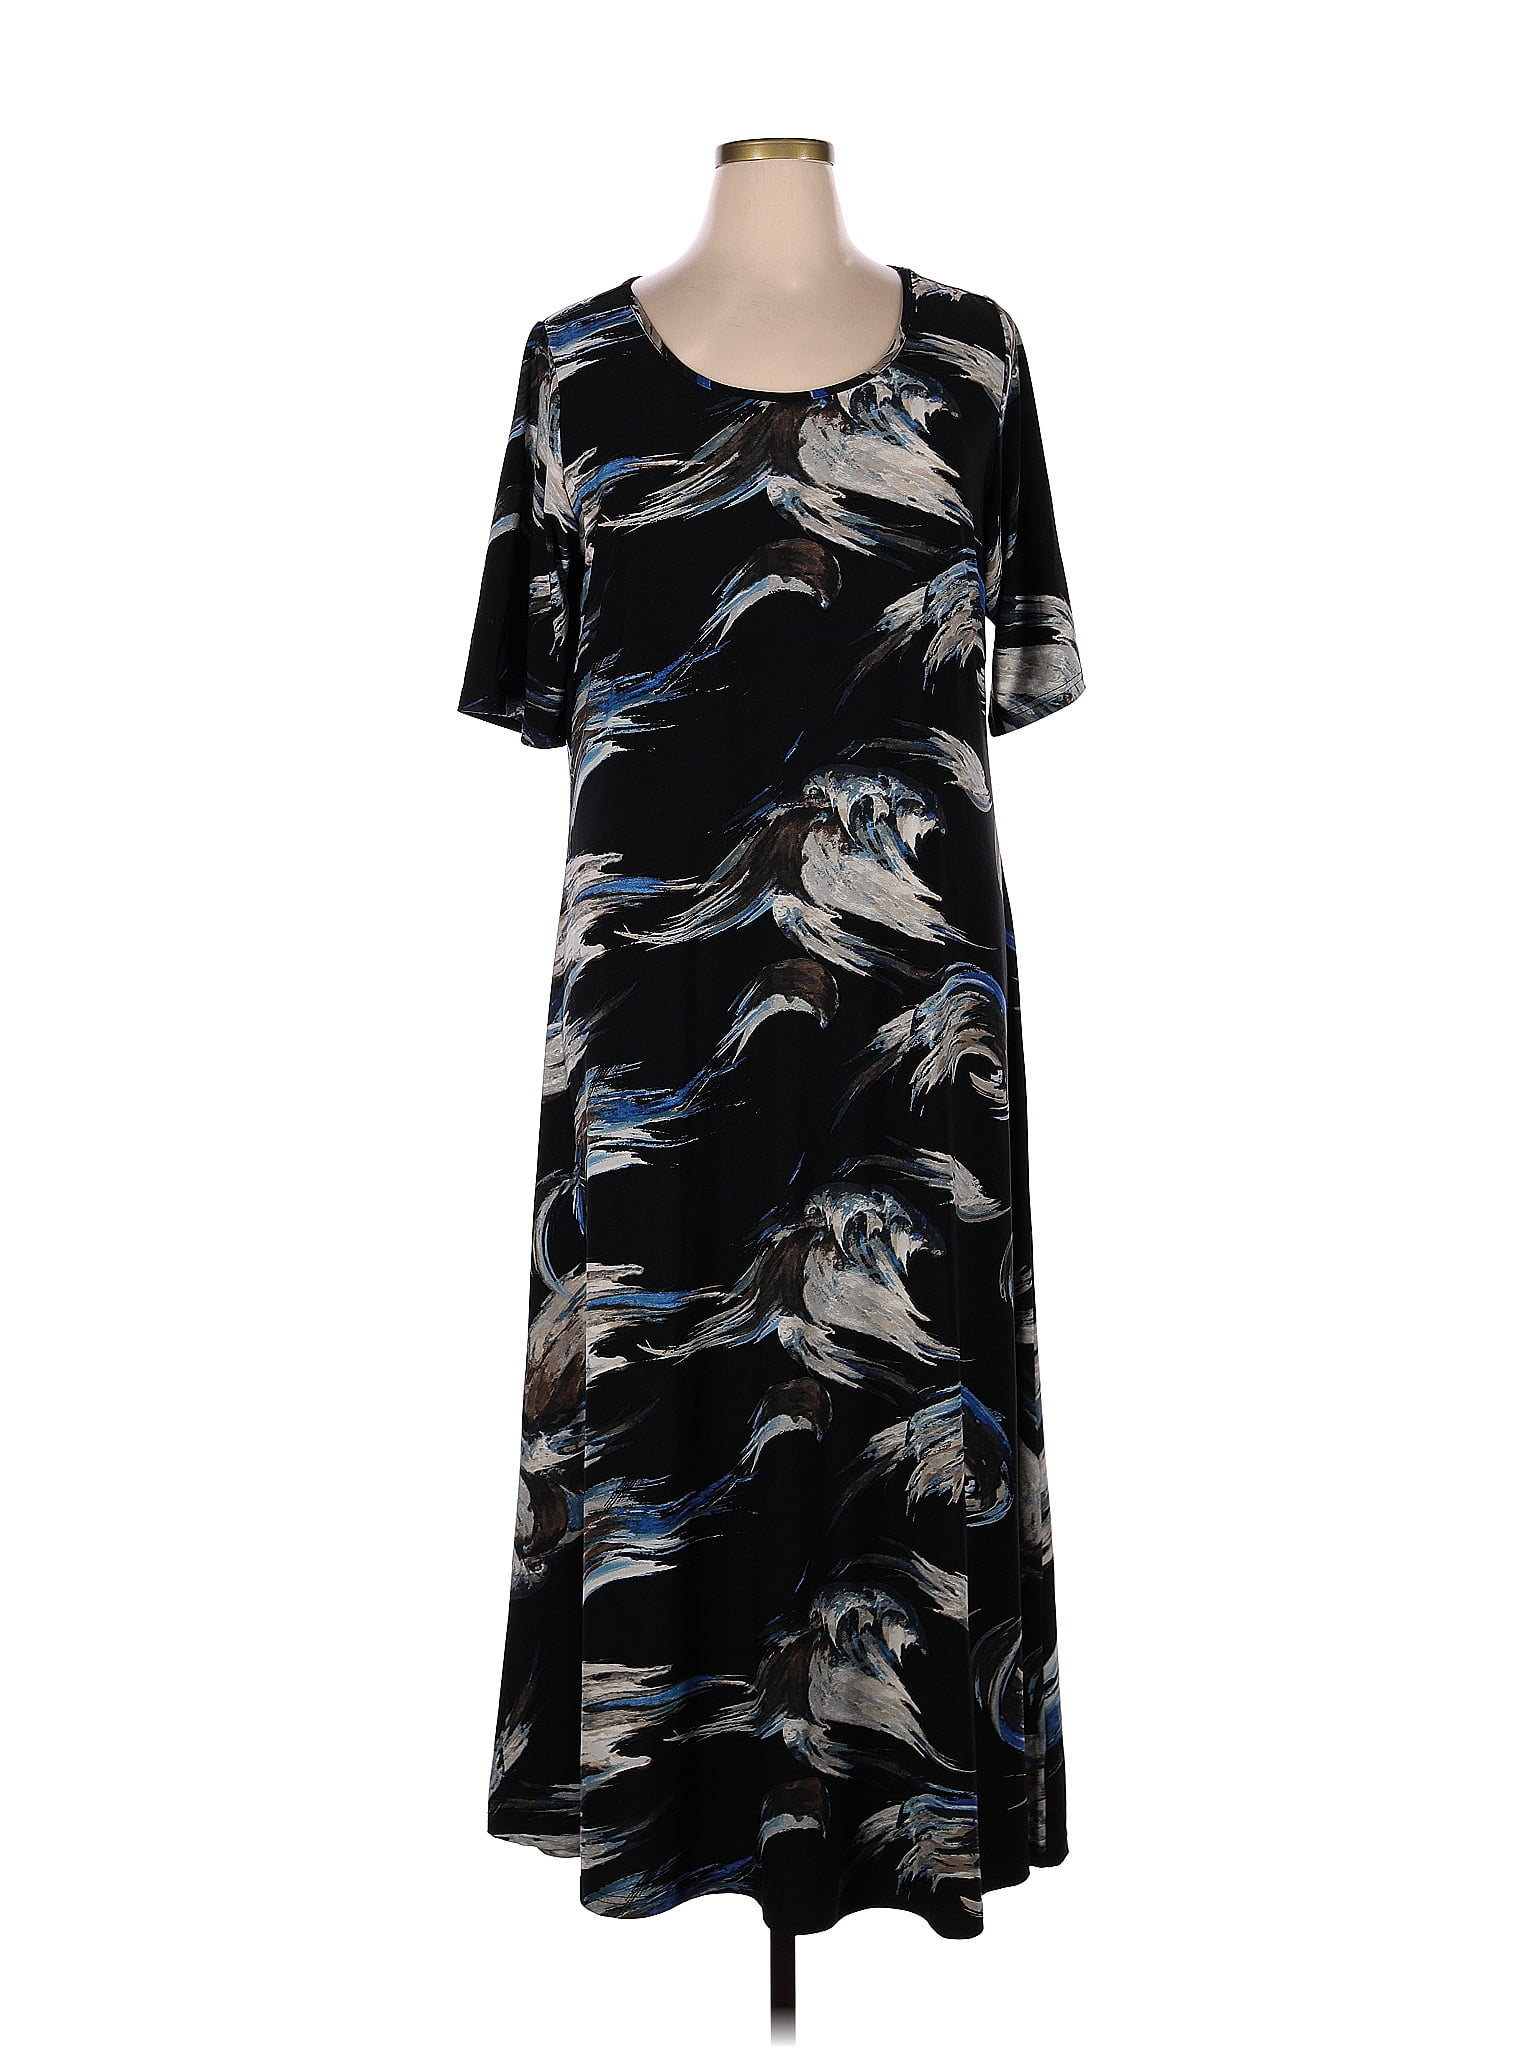 Attitudes by Renee Black Casual Dress Size 1X (Plus) - 54% off | thredUP